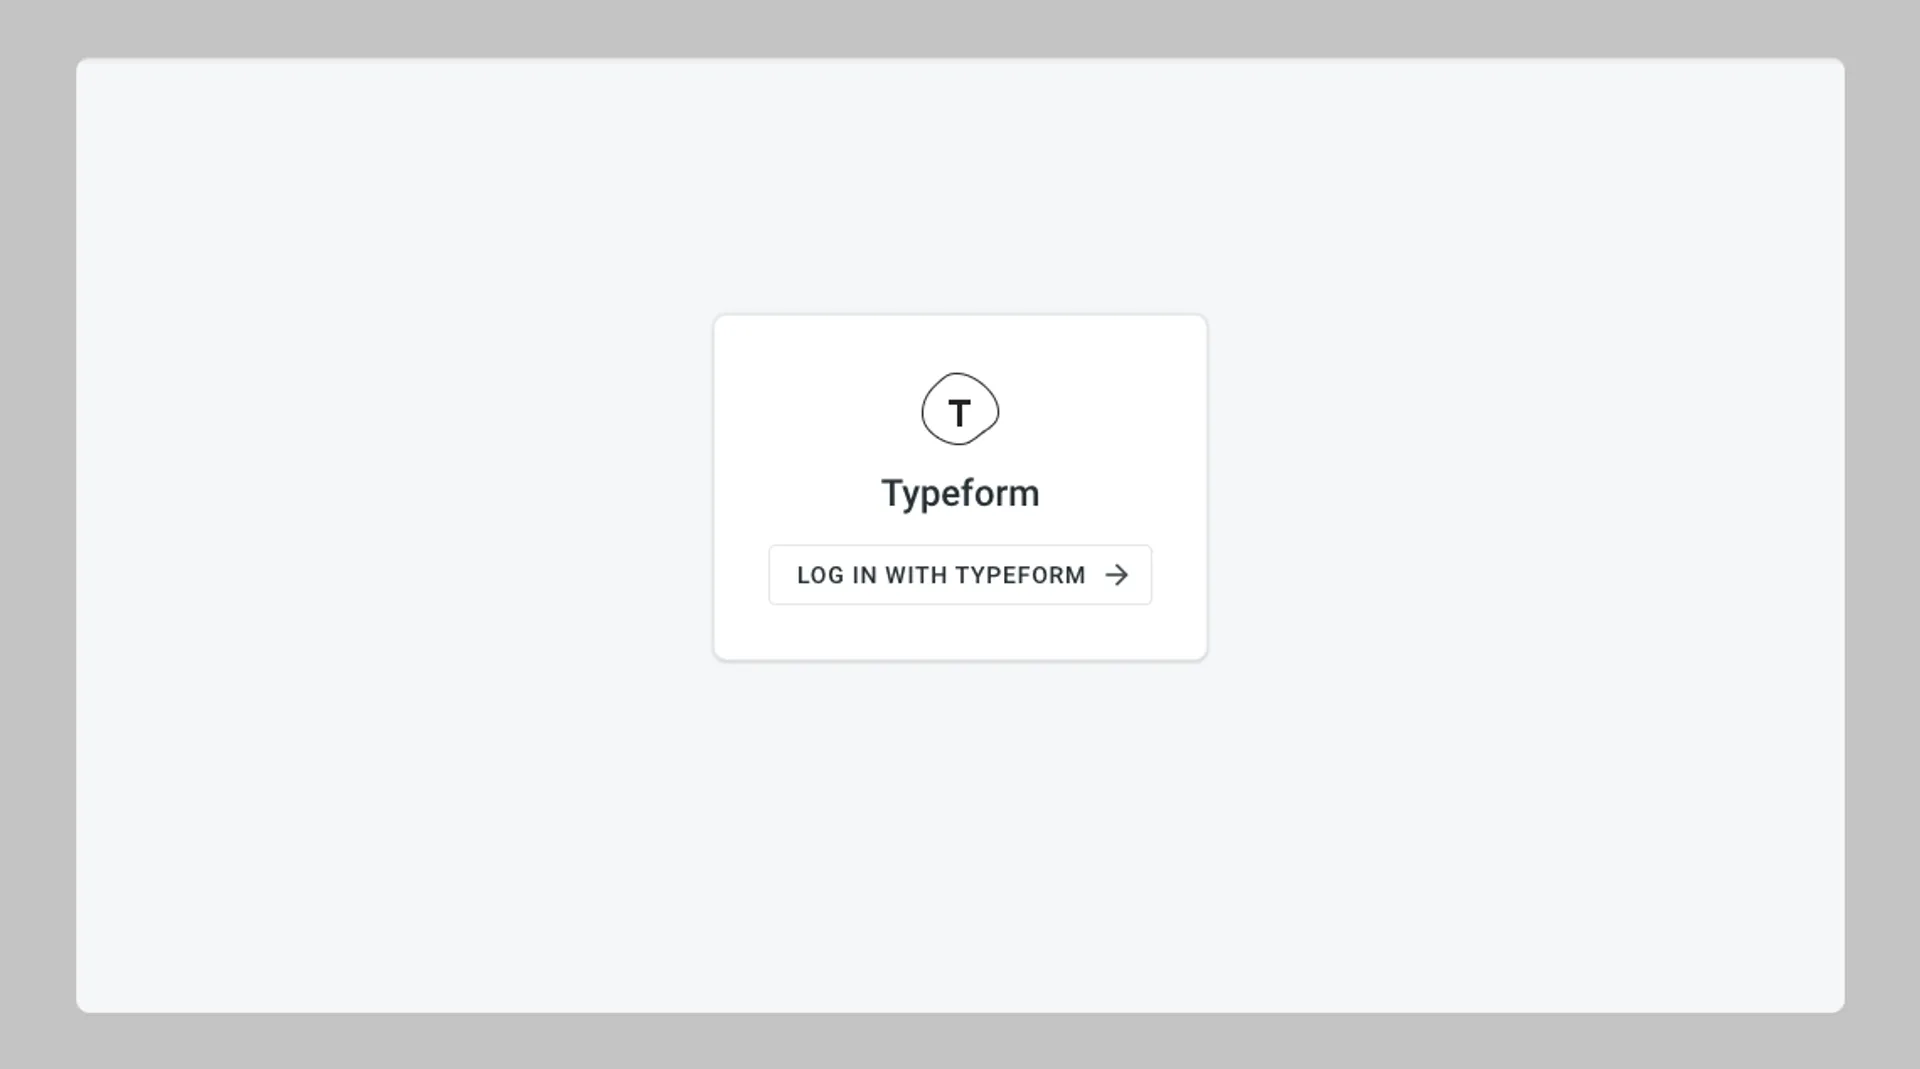 Typeform + Crowdin  Translate & localize forms and surveys